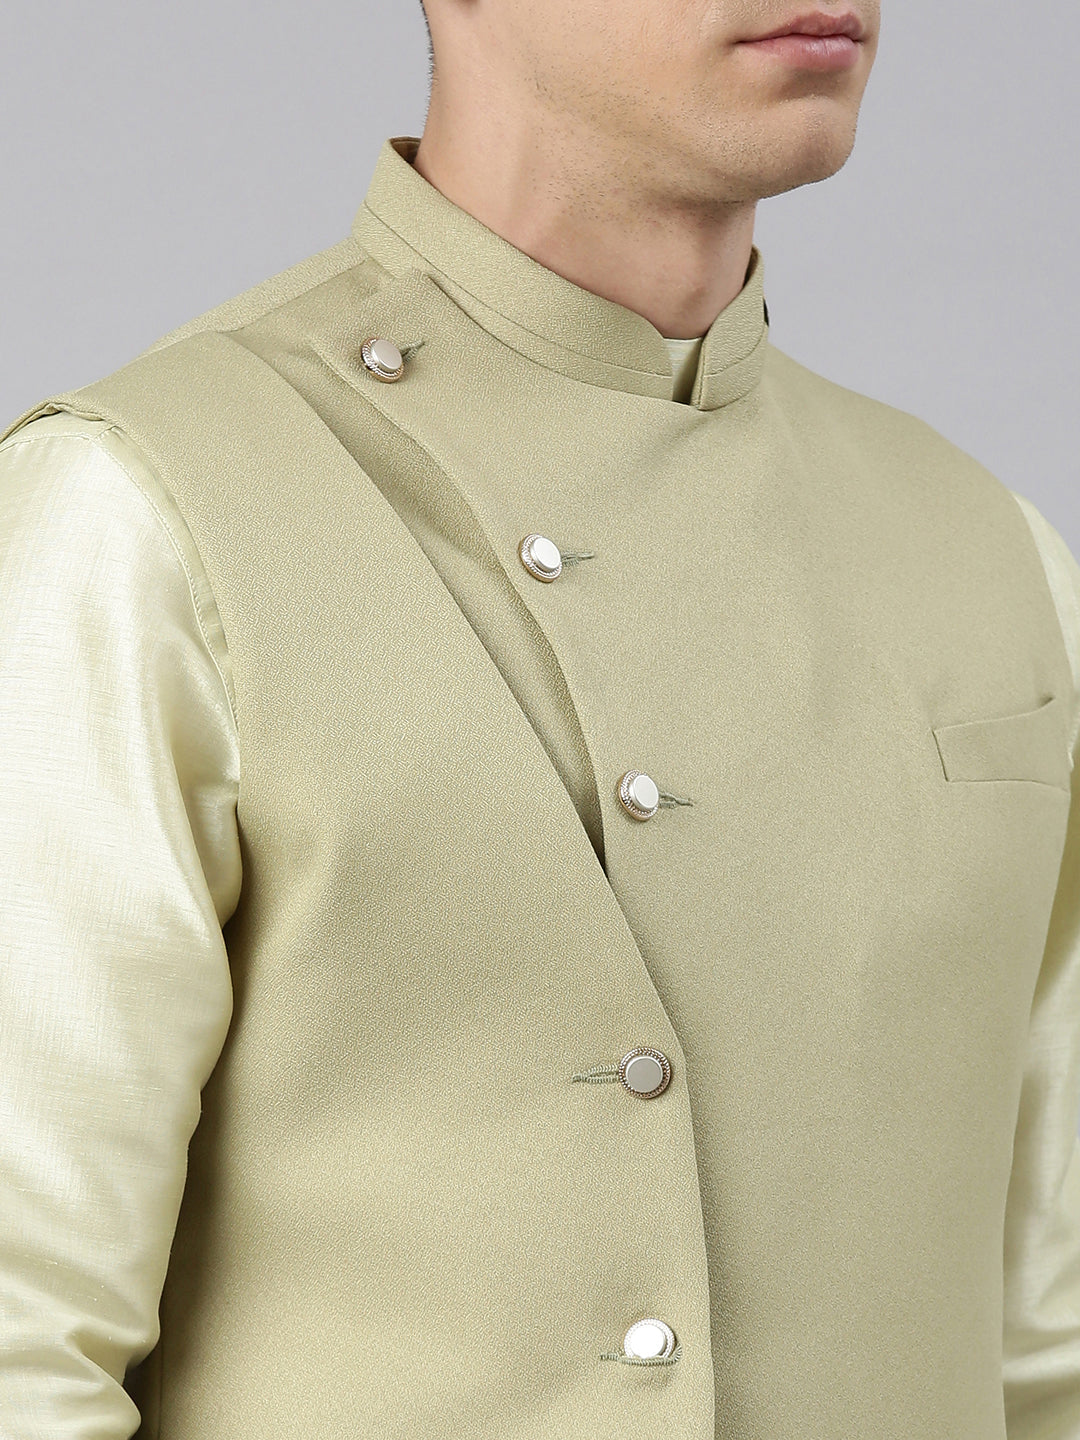 Mint Green Waistcoat Jacket